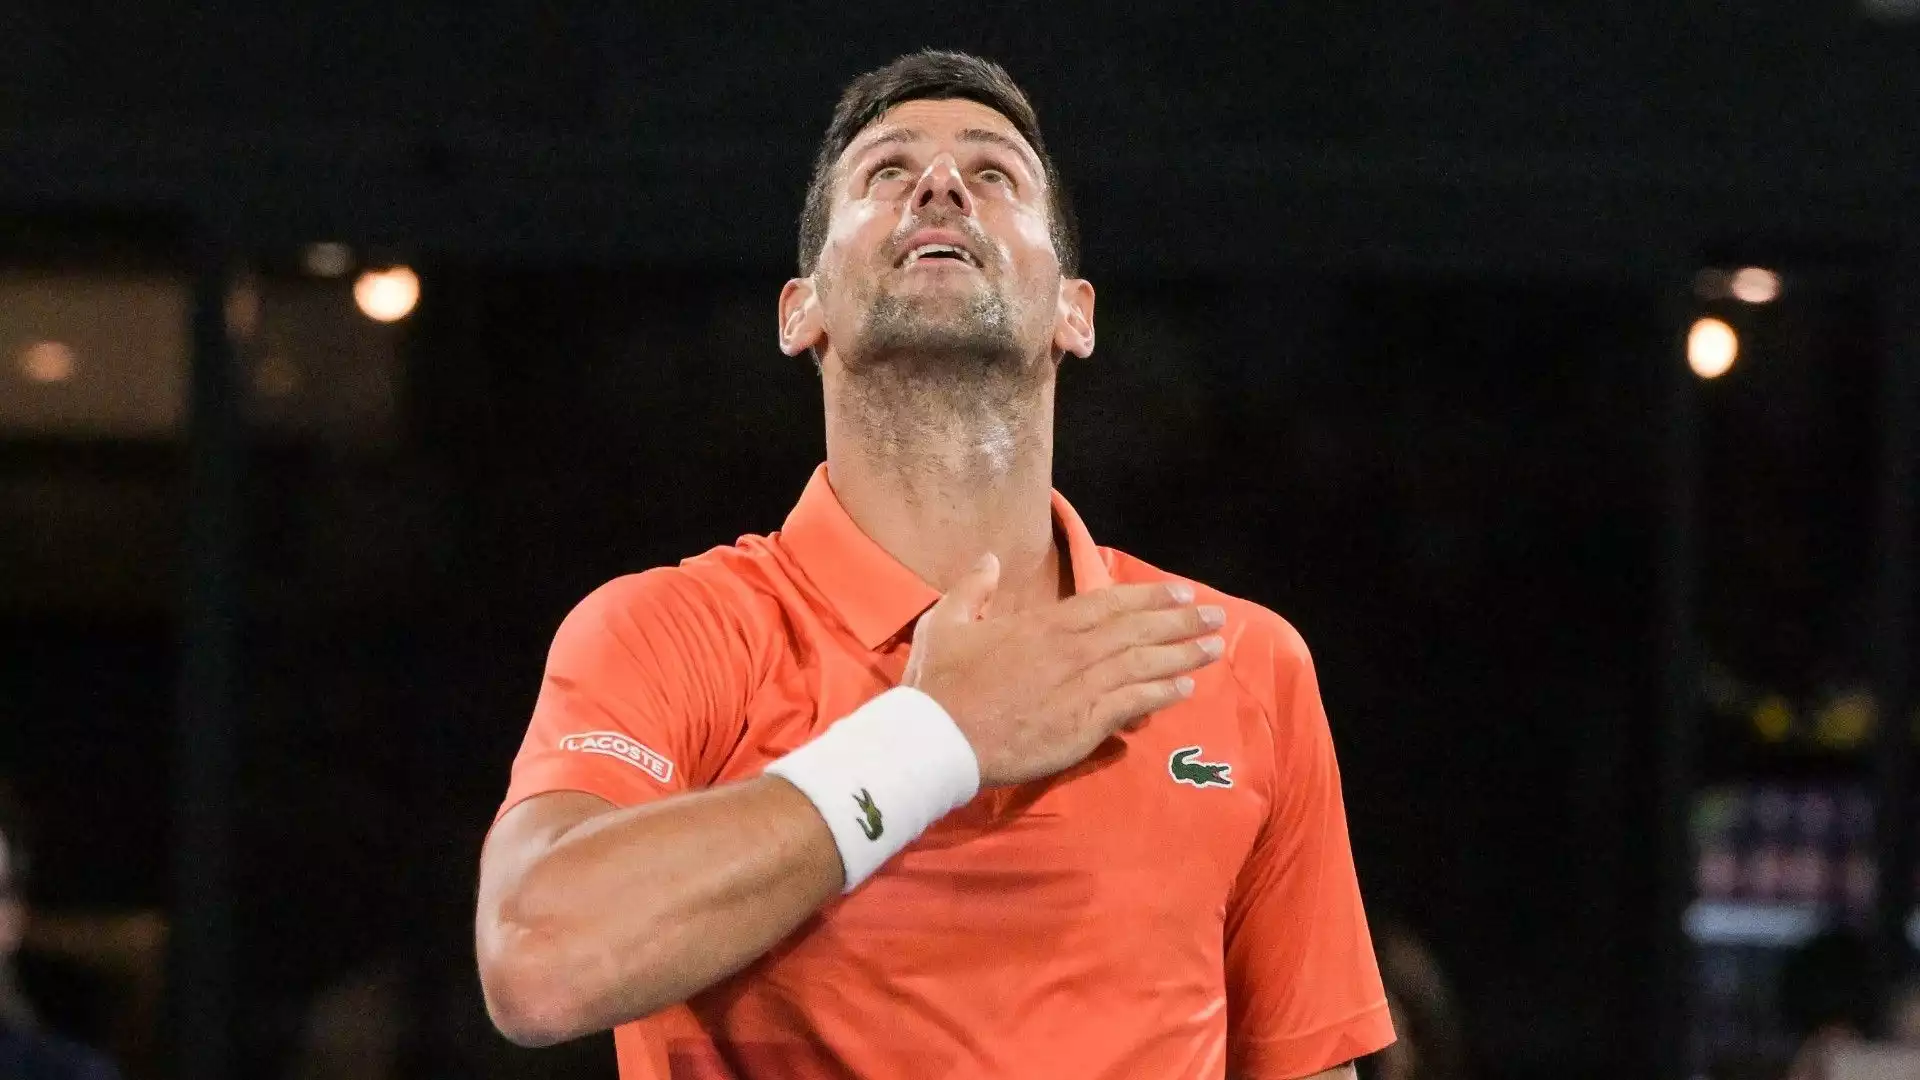 L'esultanza di Djokovic